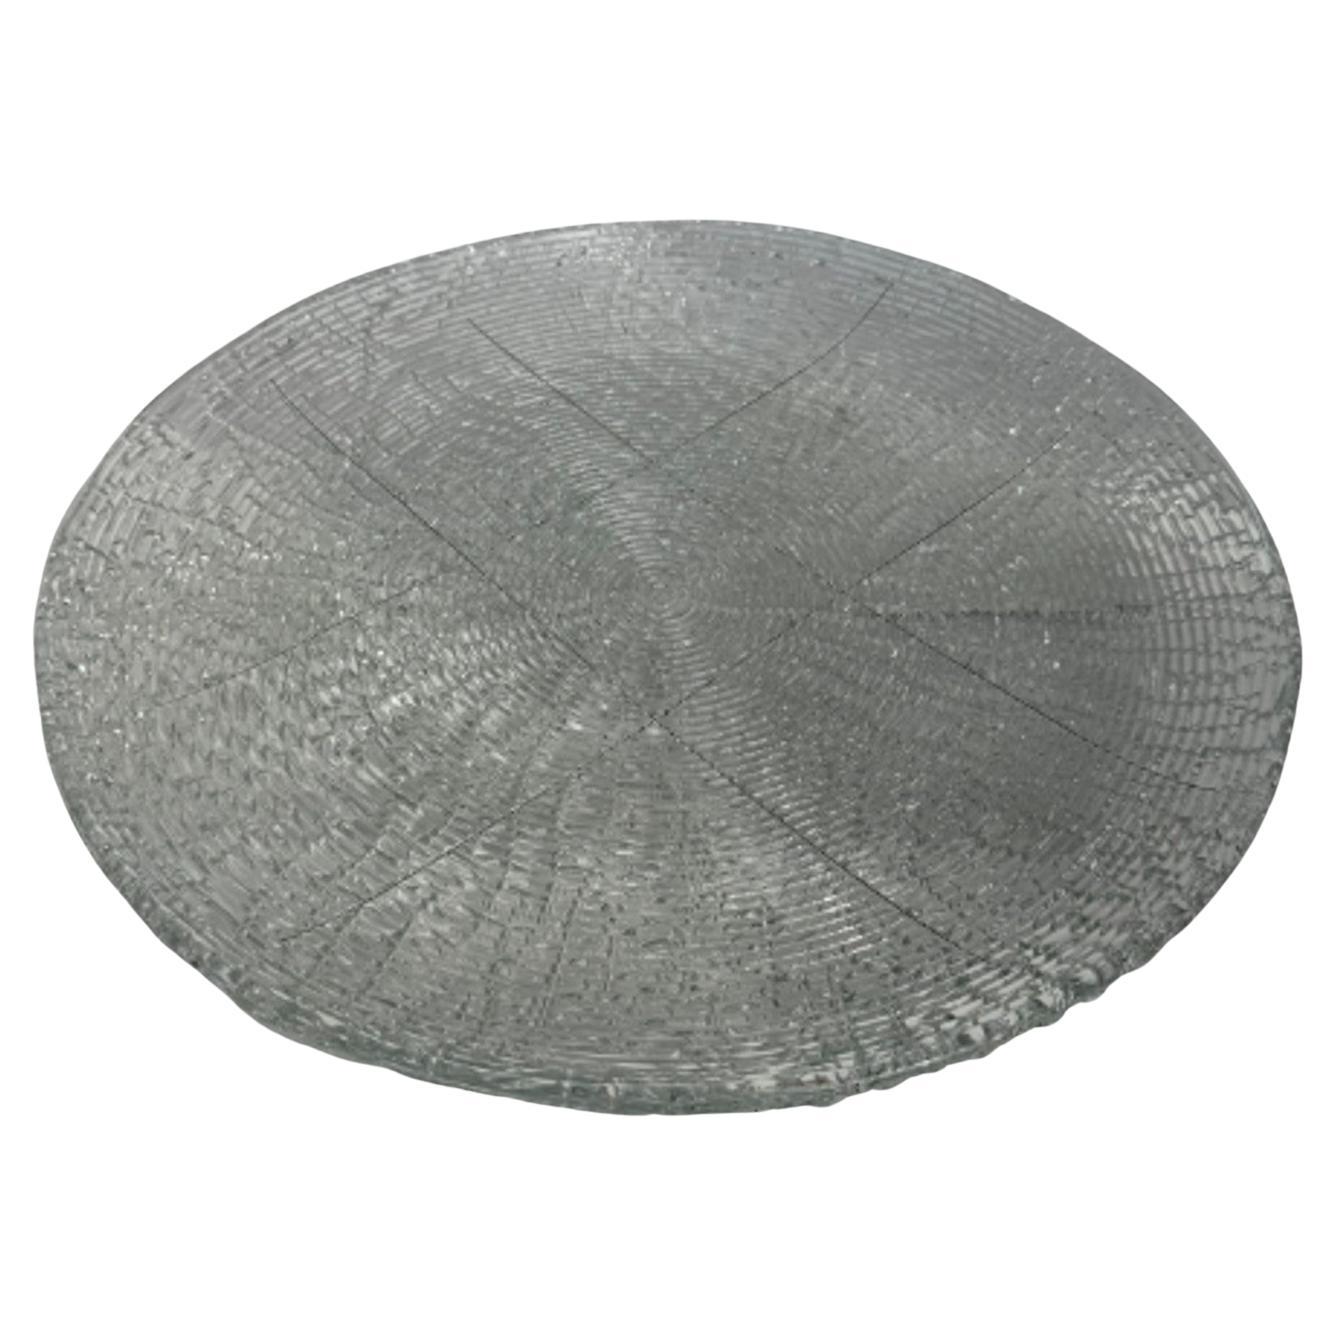 Large Vintage Textured Glass Platter with Spiral Pattern